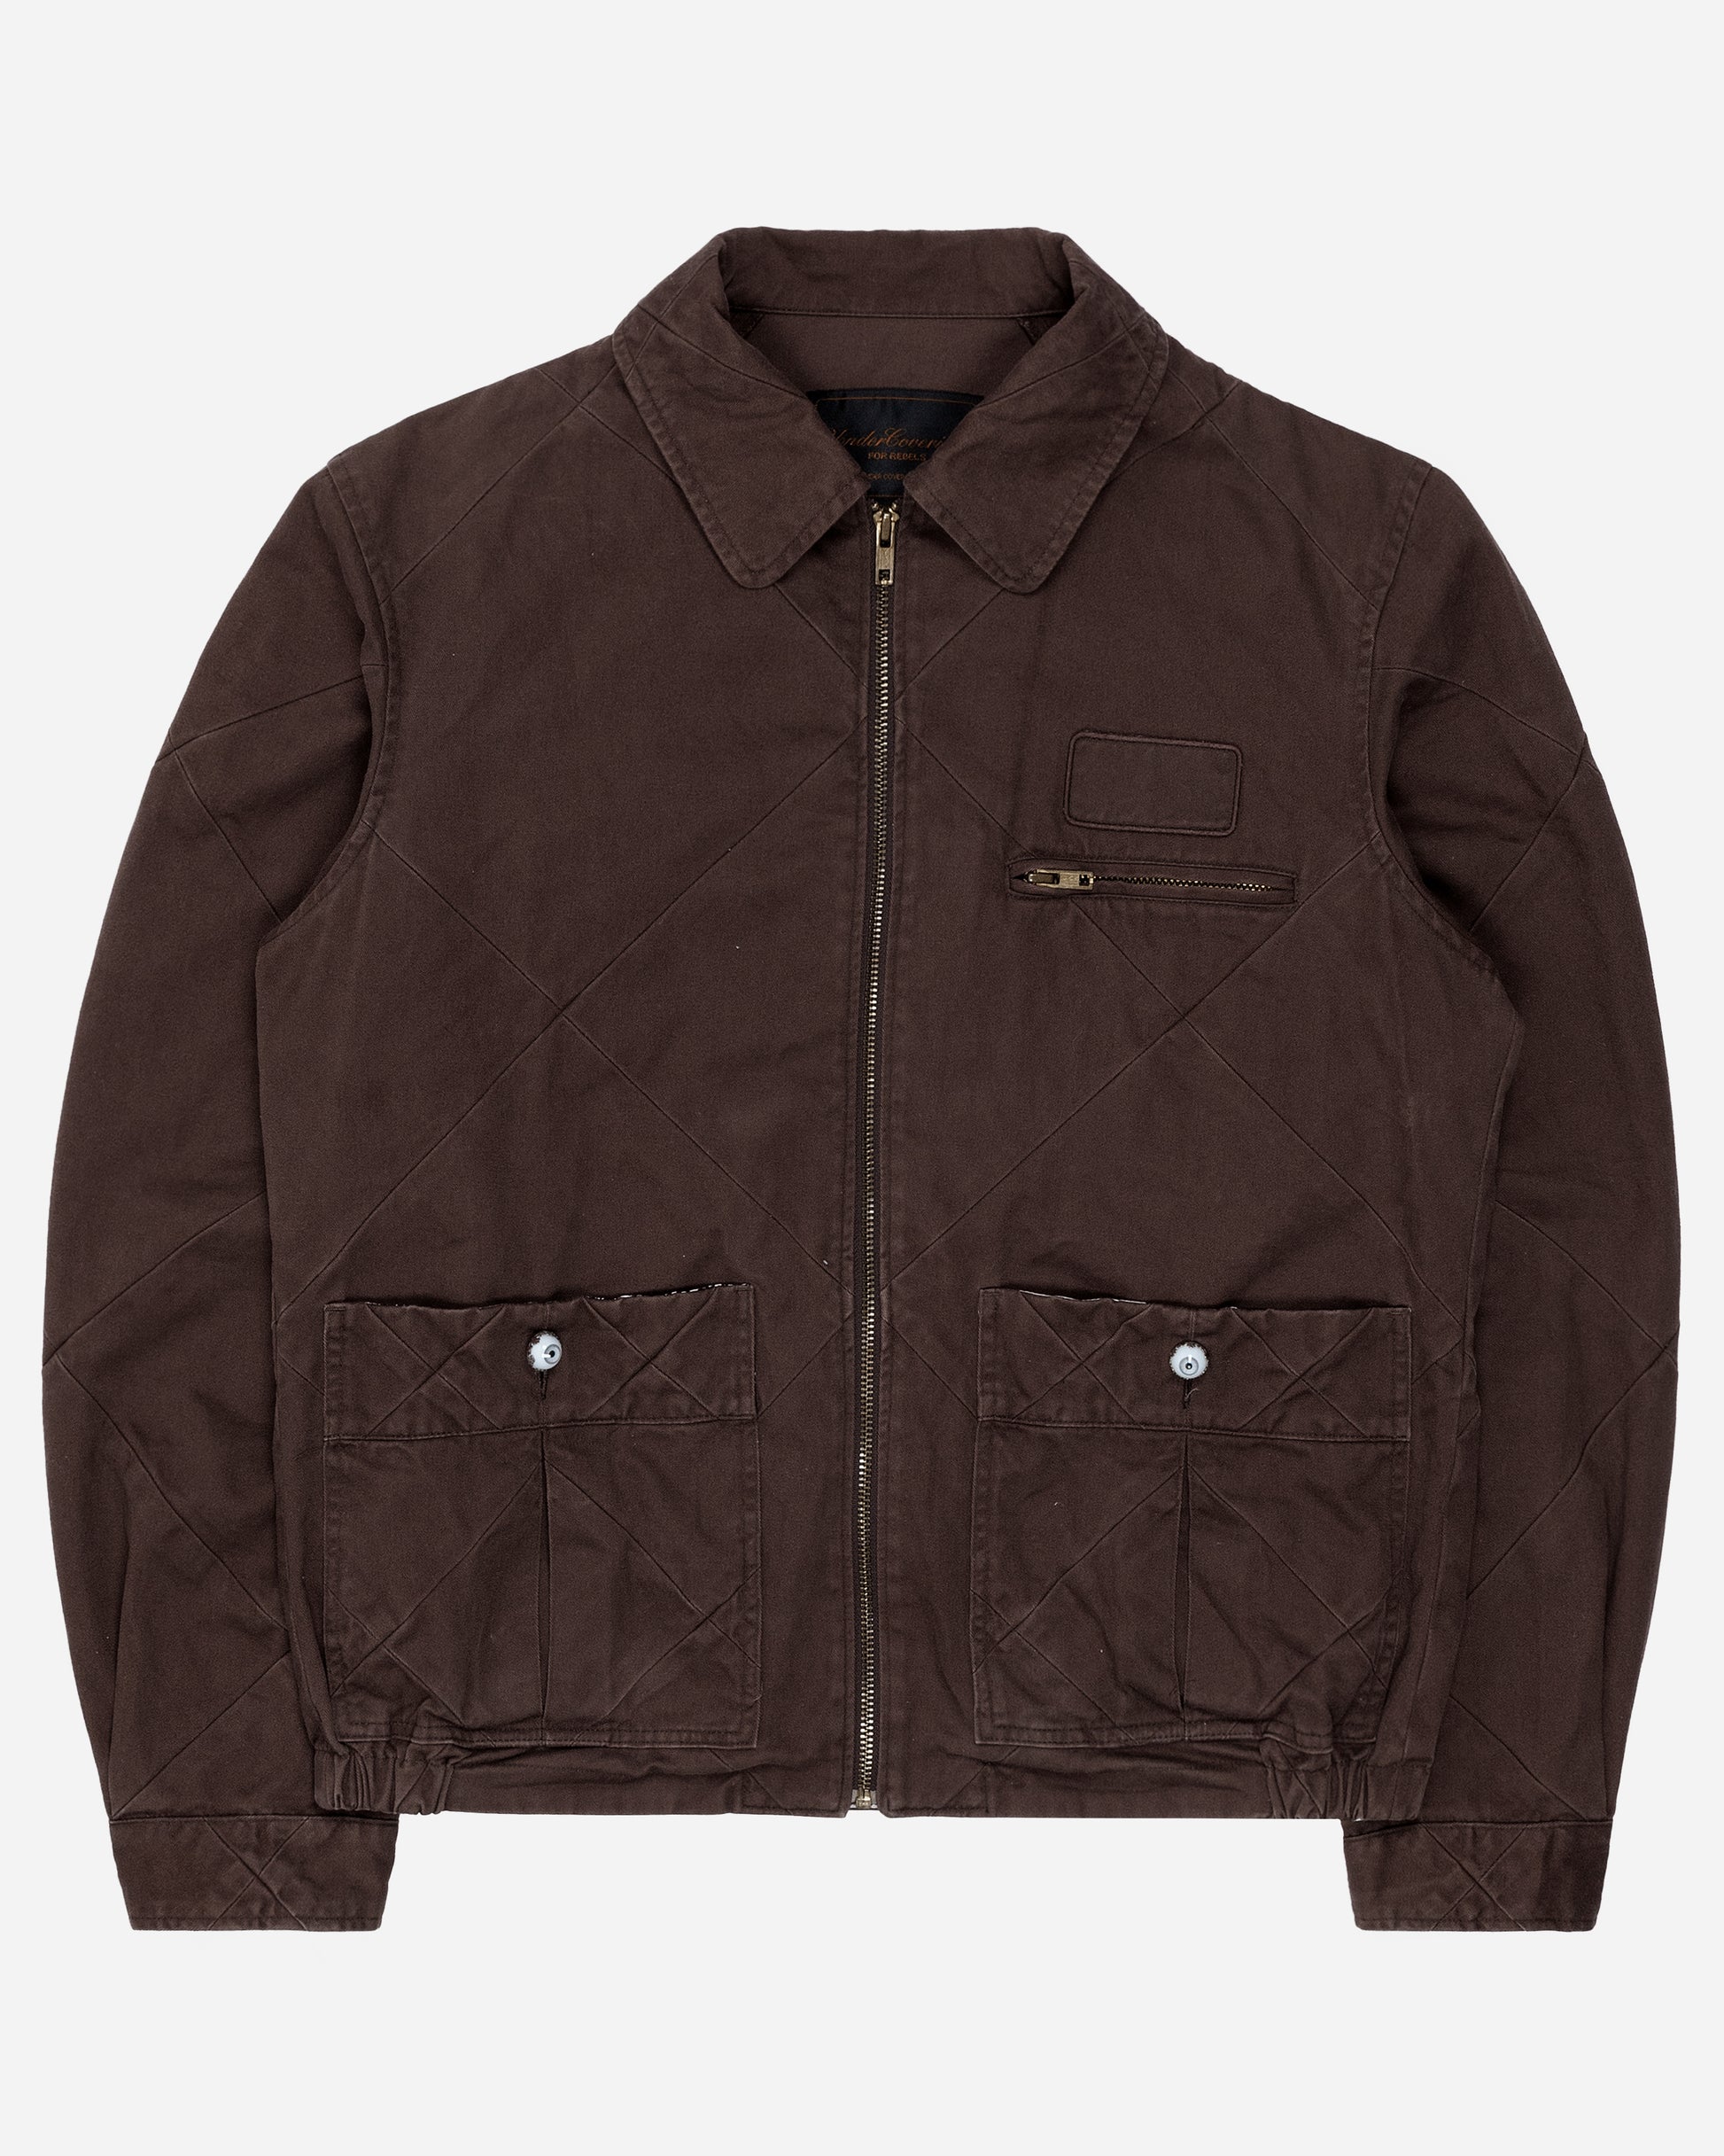 Undercover Brown Paneled Zip-Up Work Jacket - SS05 “BBII Homage To Jan ...